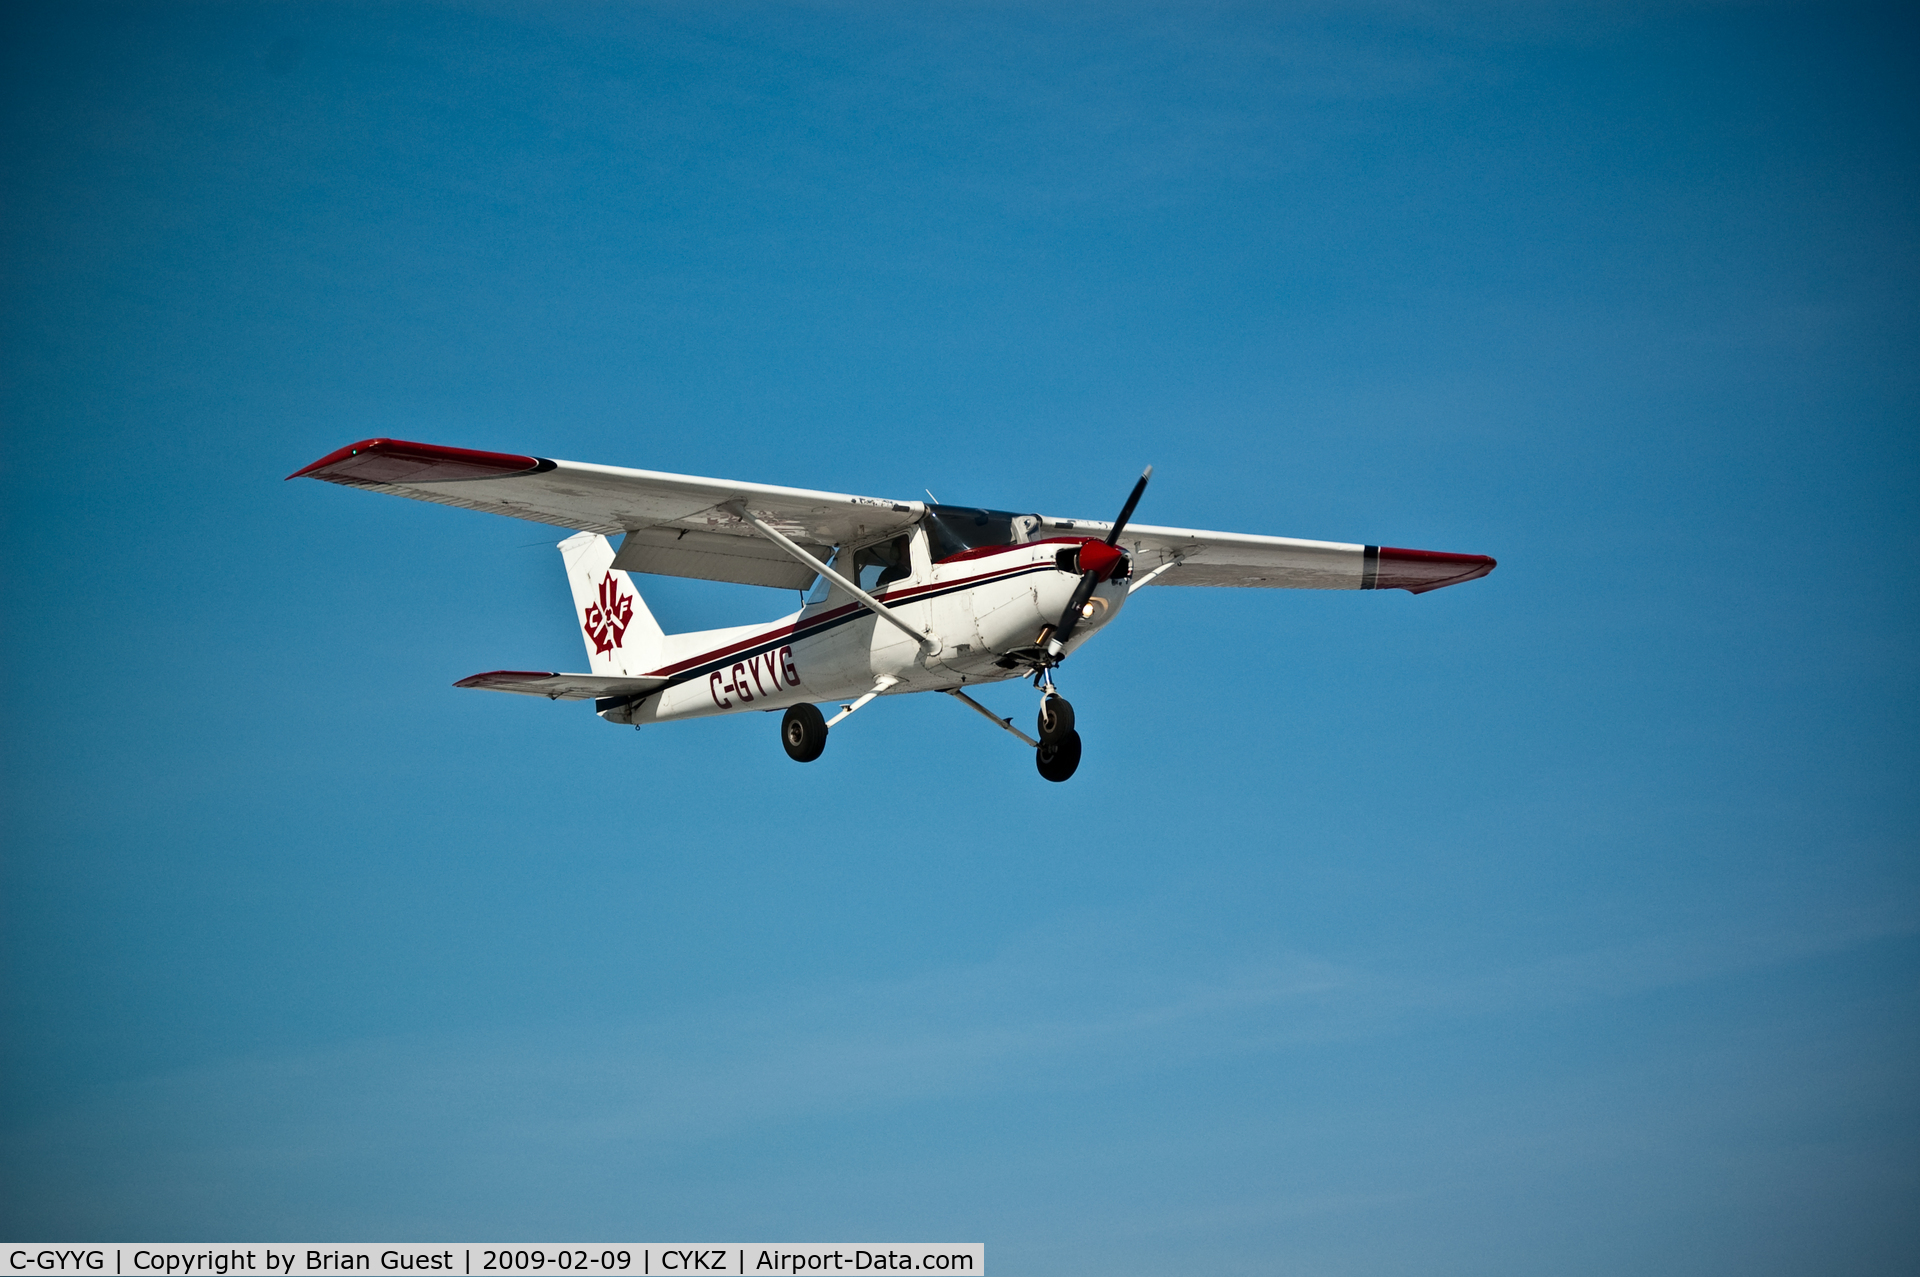 C-GYYG, 1978 Cessna 152 C/N 15282413, Landing at Toronto/Buttonville Municipal Airport